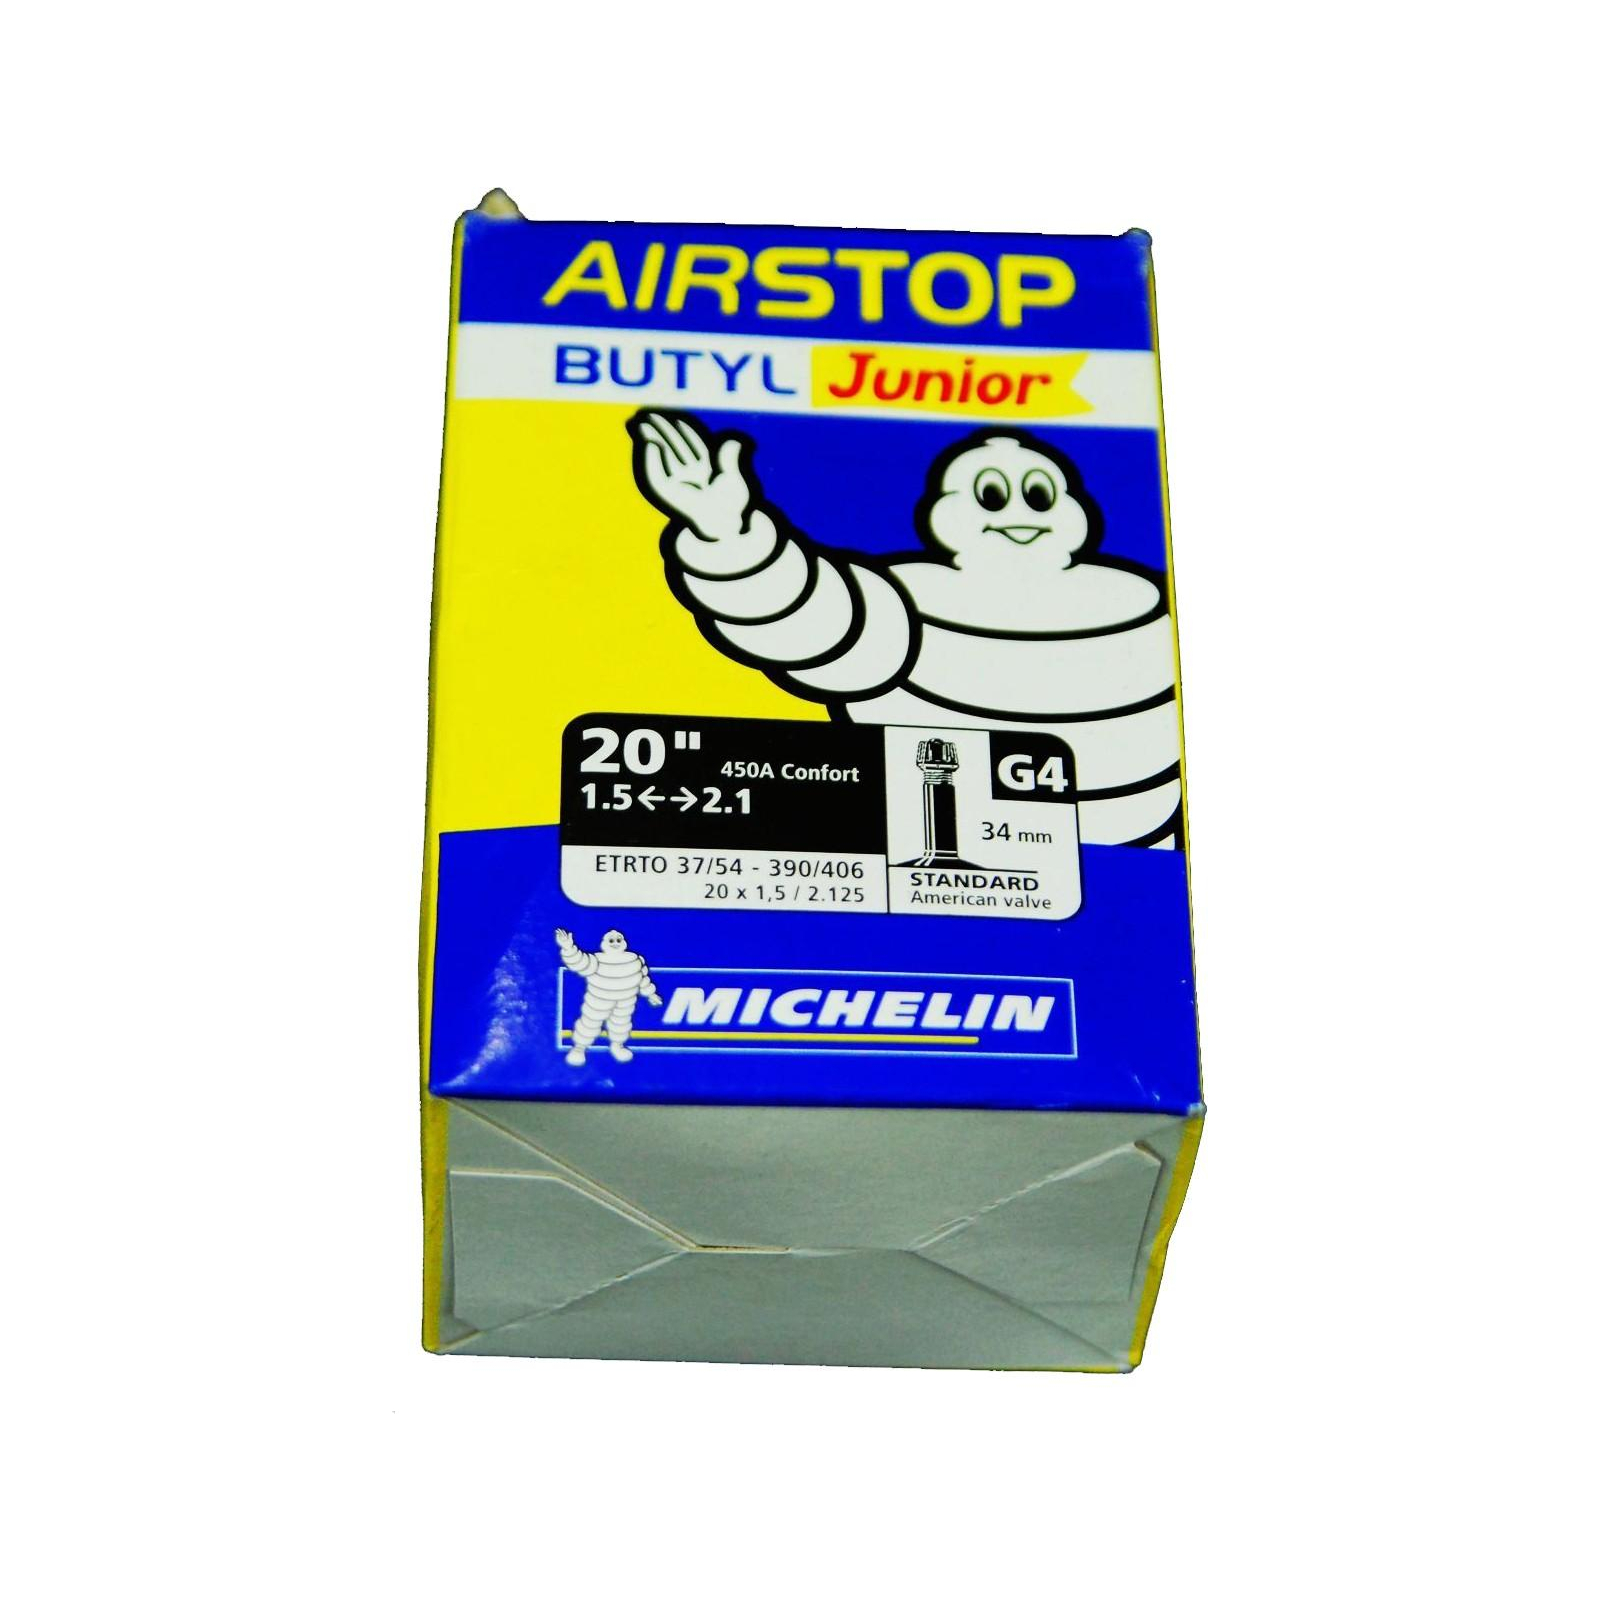 Велосипедна камера Michelin G4 AIRSTOP, MTB 20" (37/54X390/406) ST (819653)